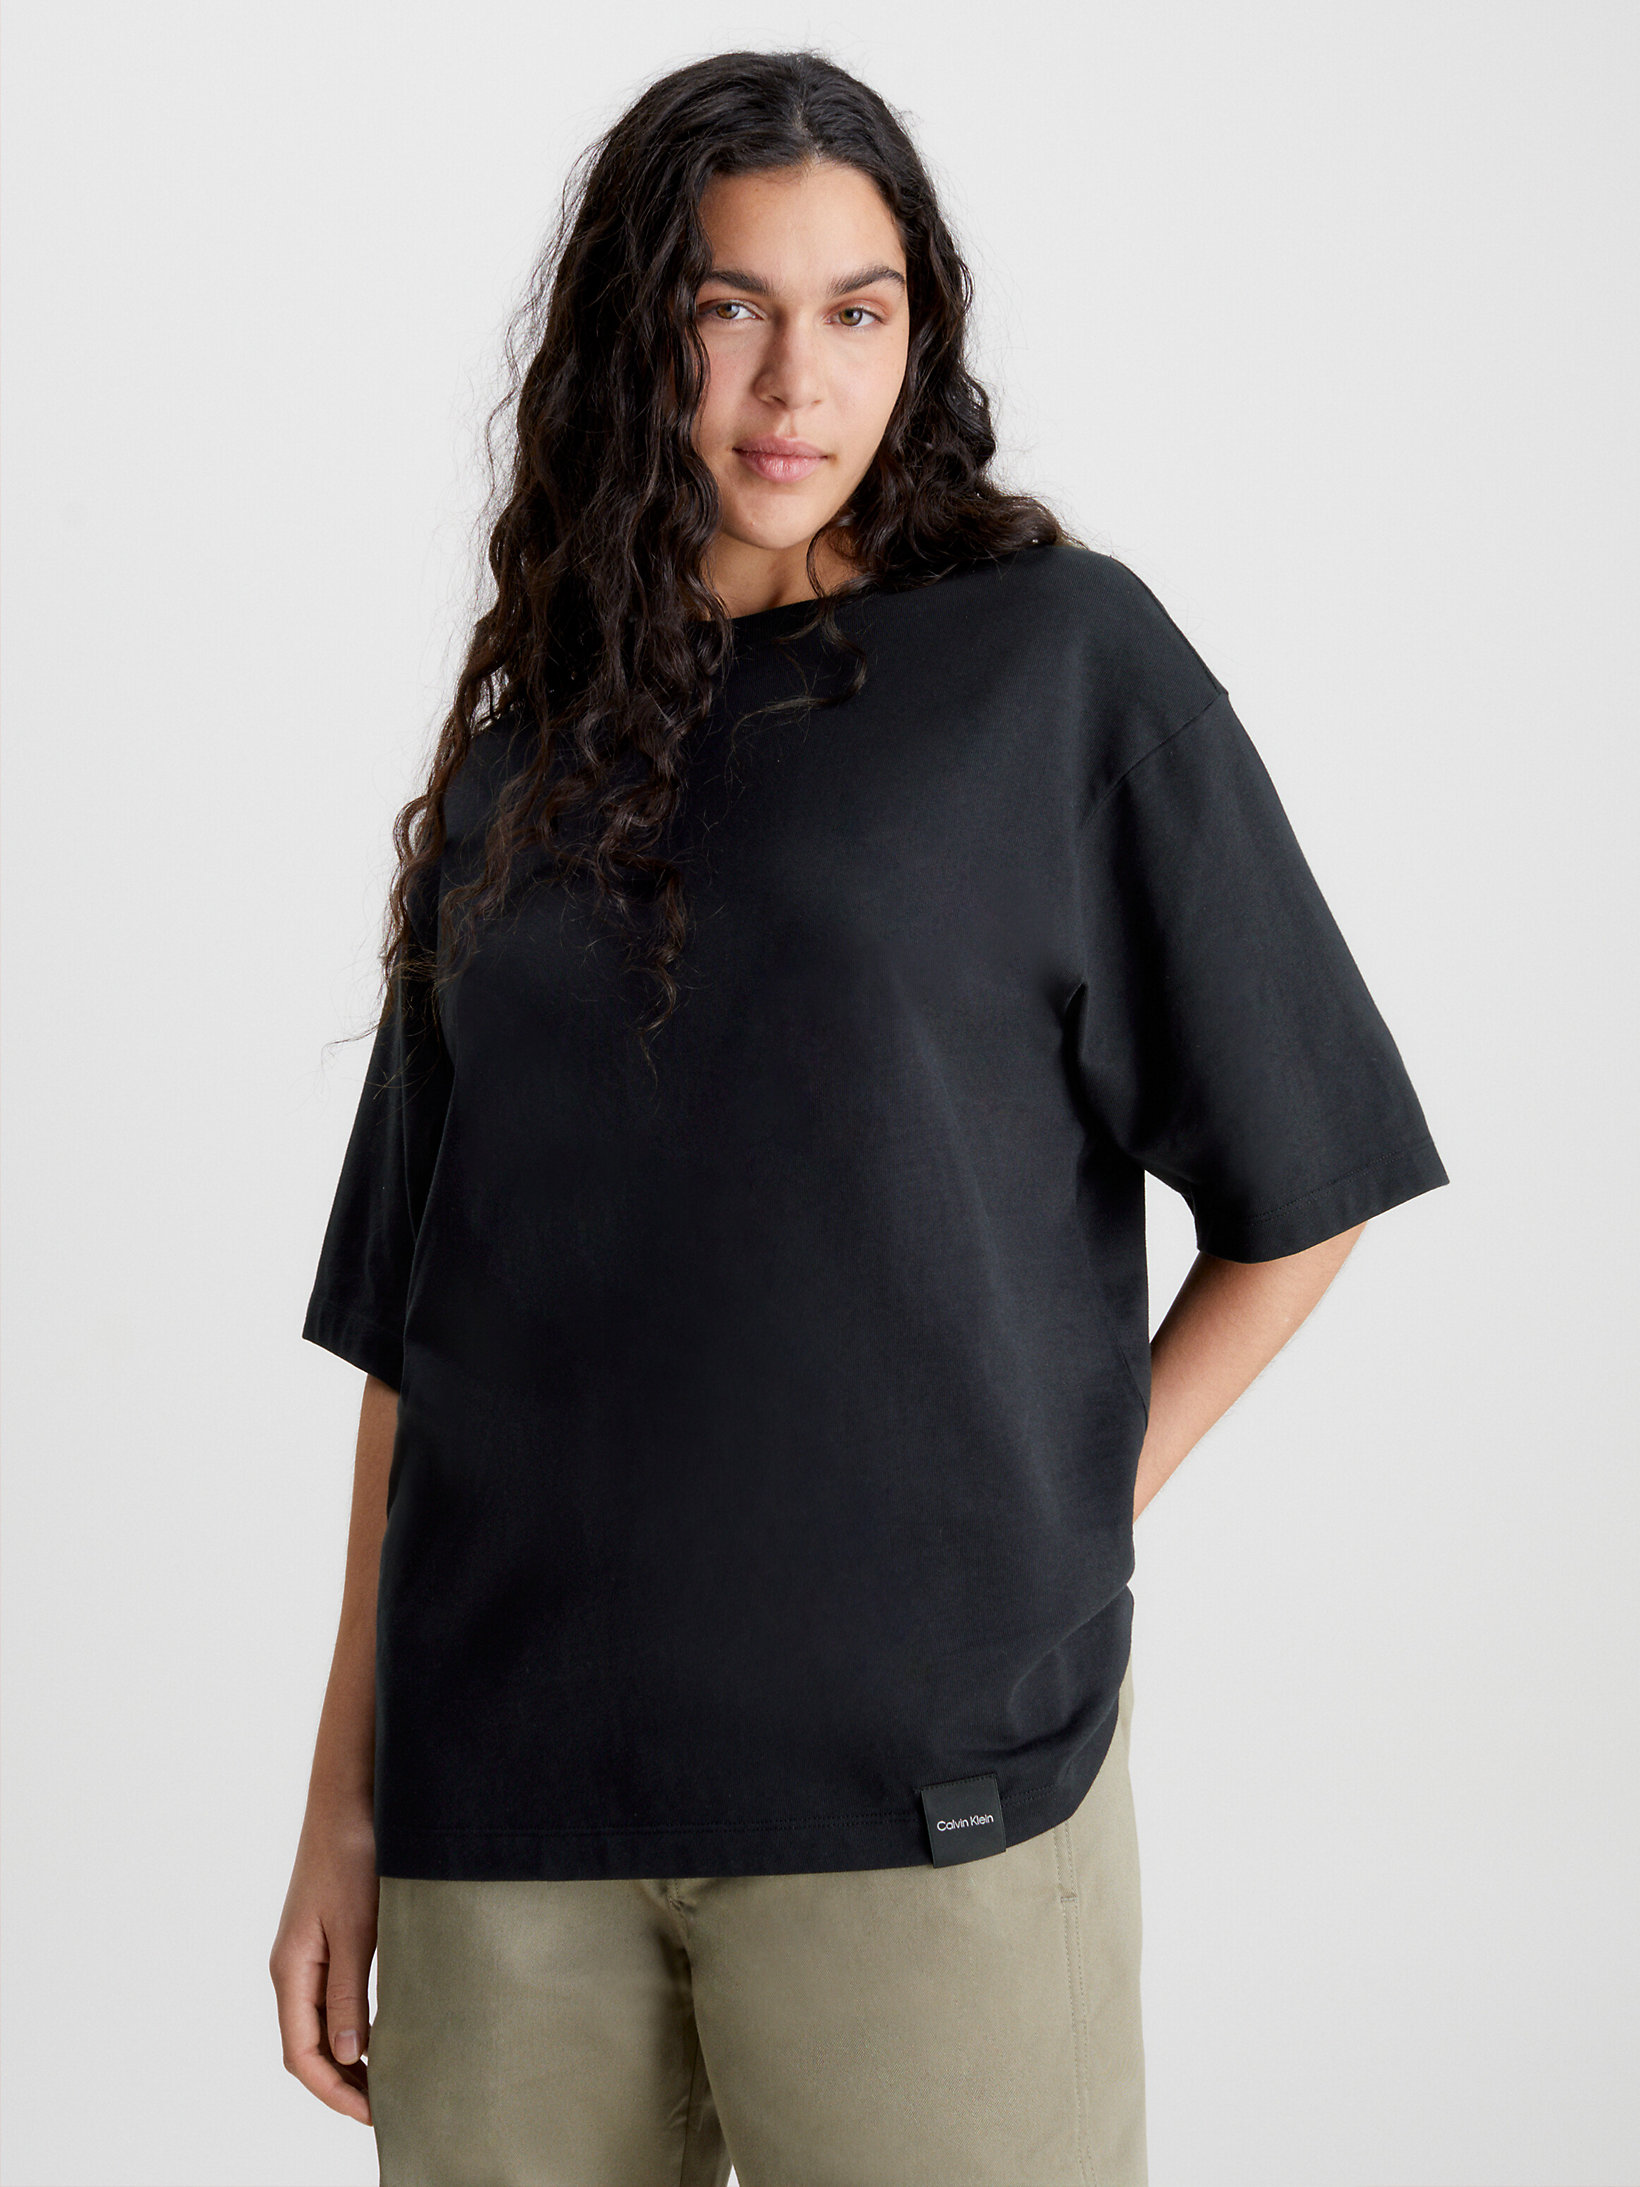 Black Beauty Unisex Relaxed T-Shirt - CK Standards undefined unisex Calvin Klein